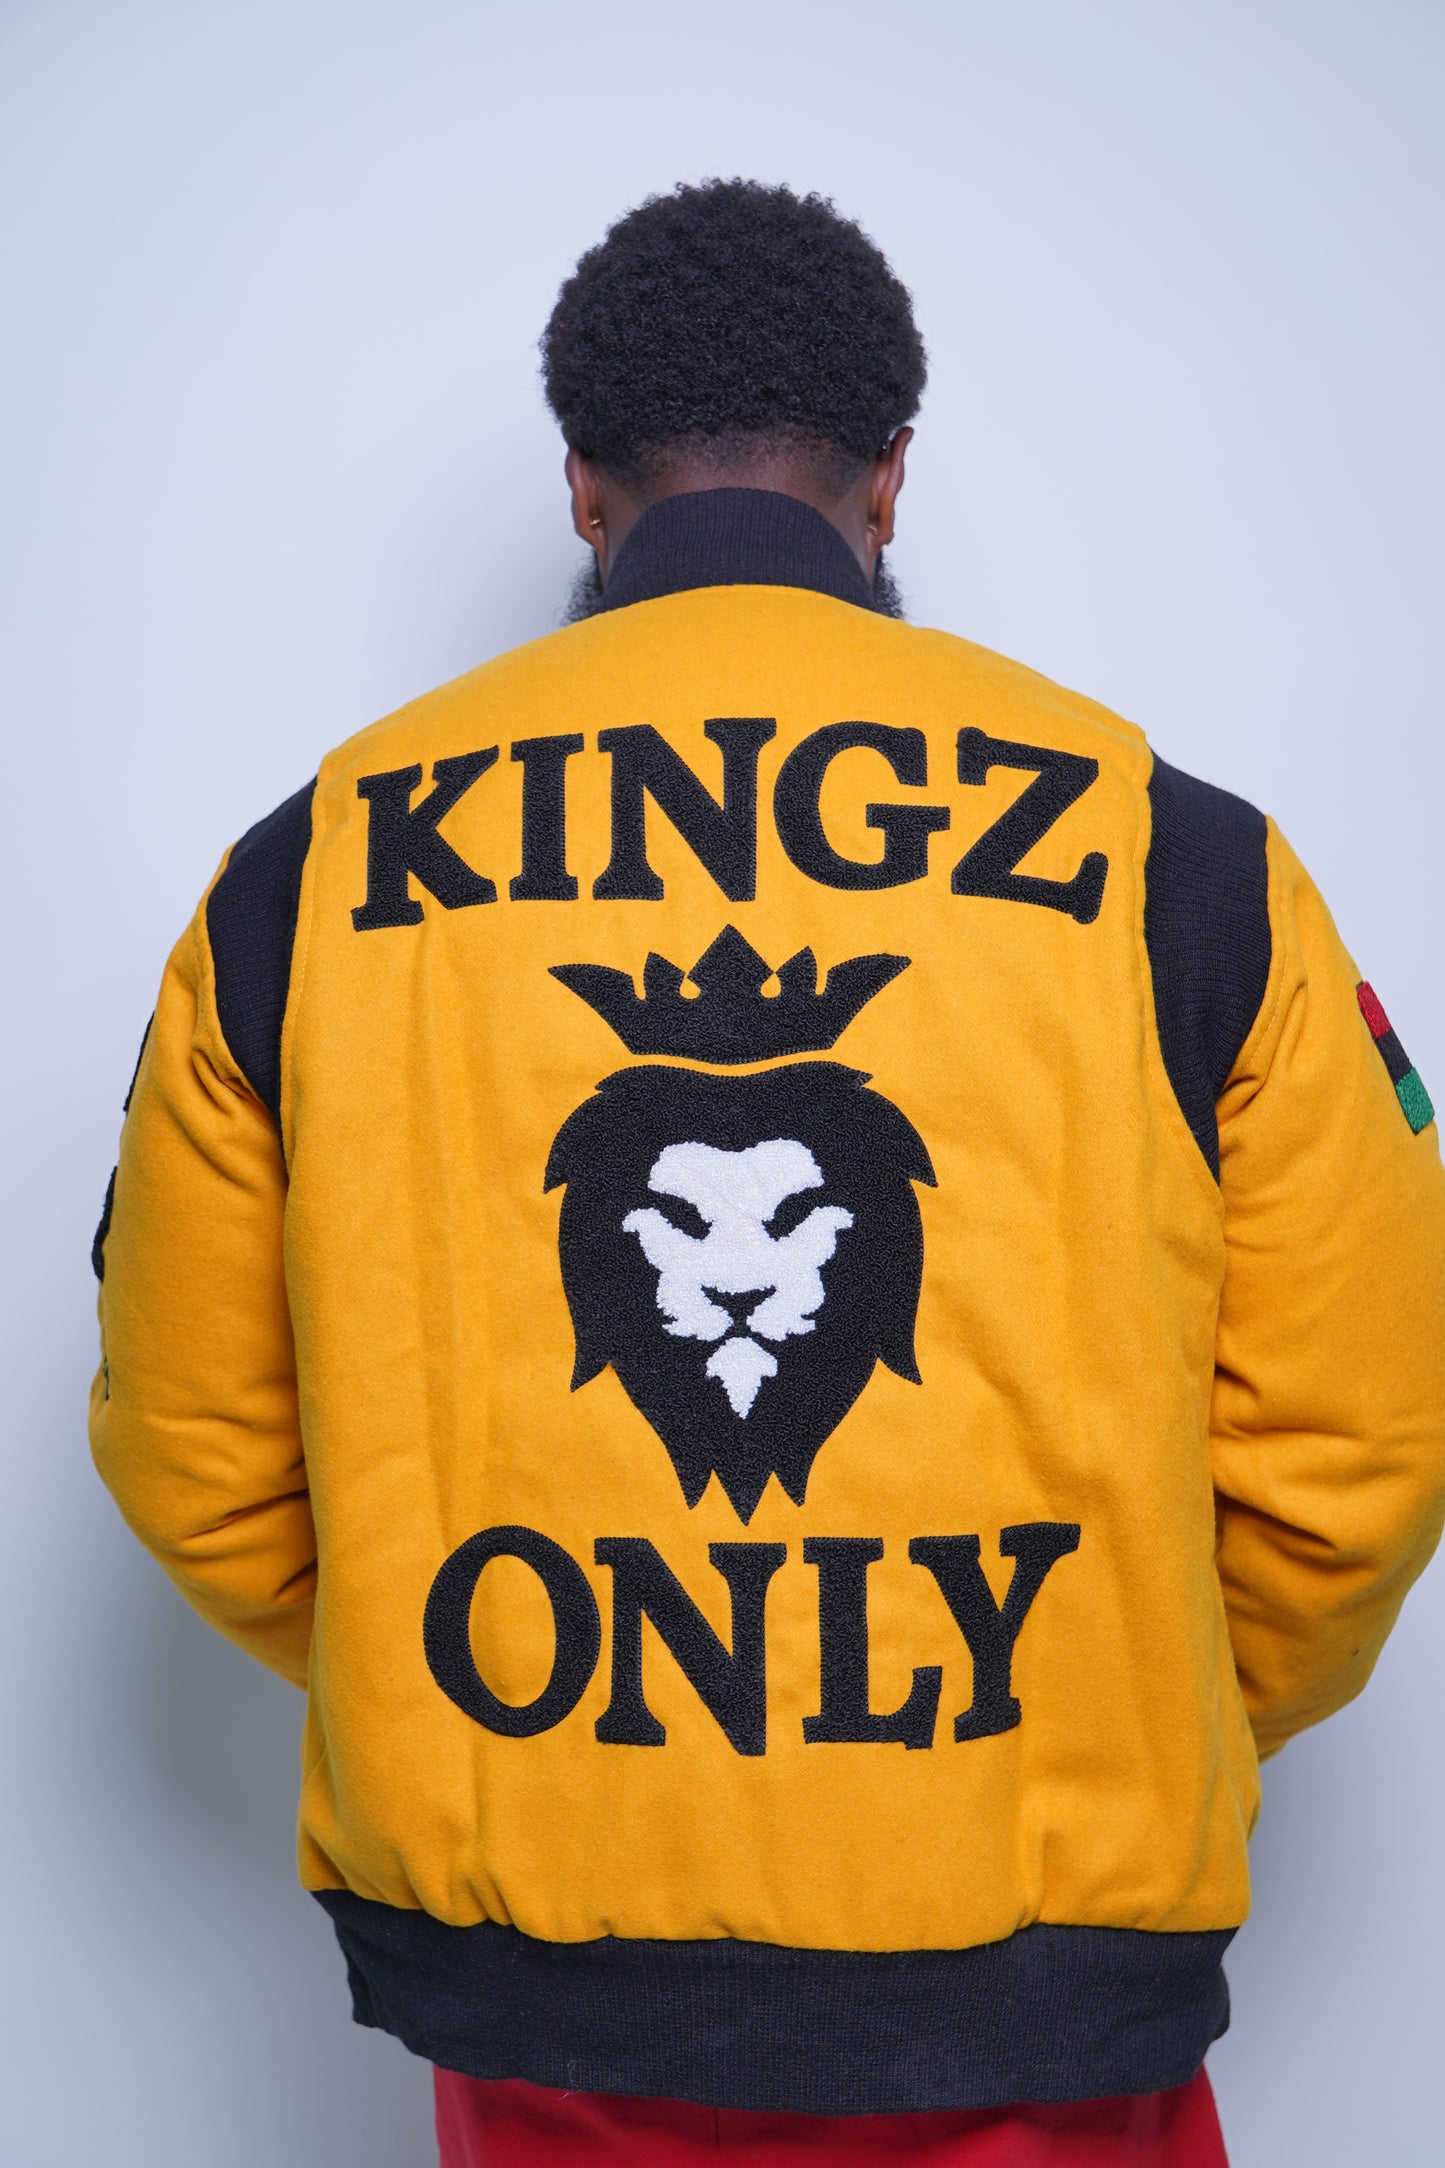 Kingz Live Forever Yellow and Black Varsity Jacket